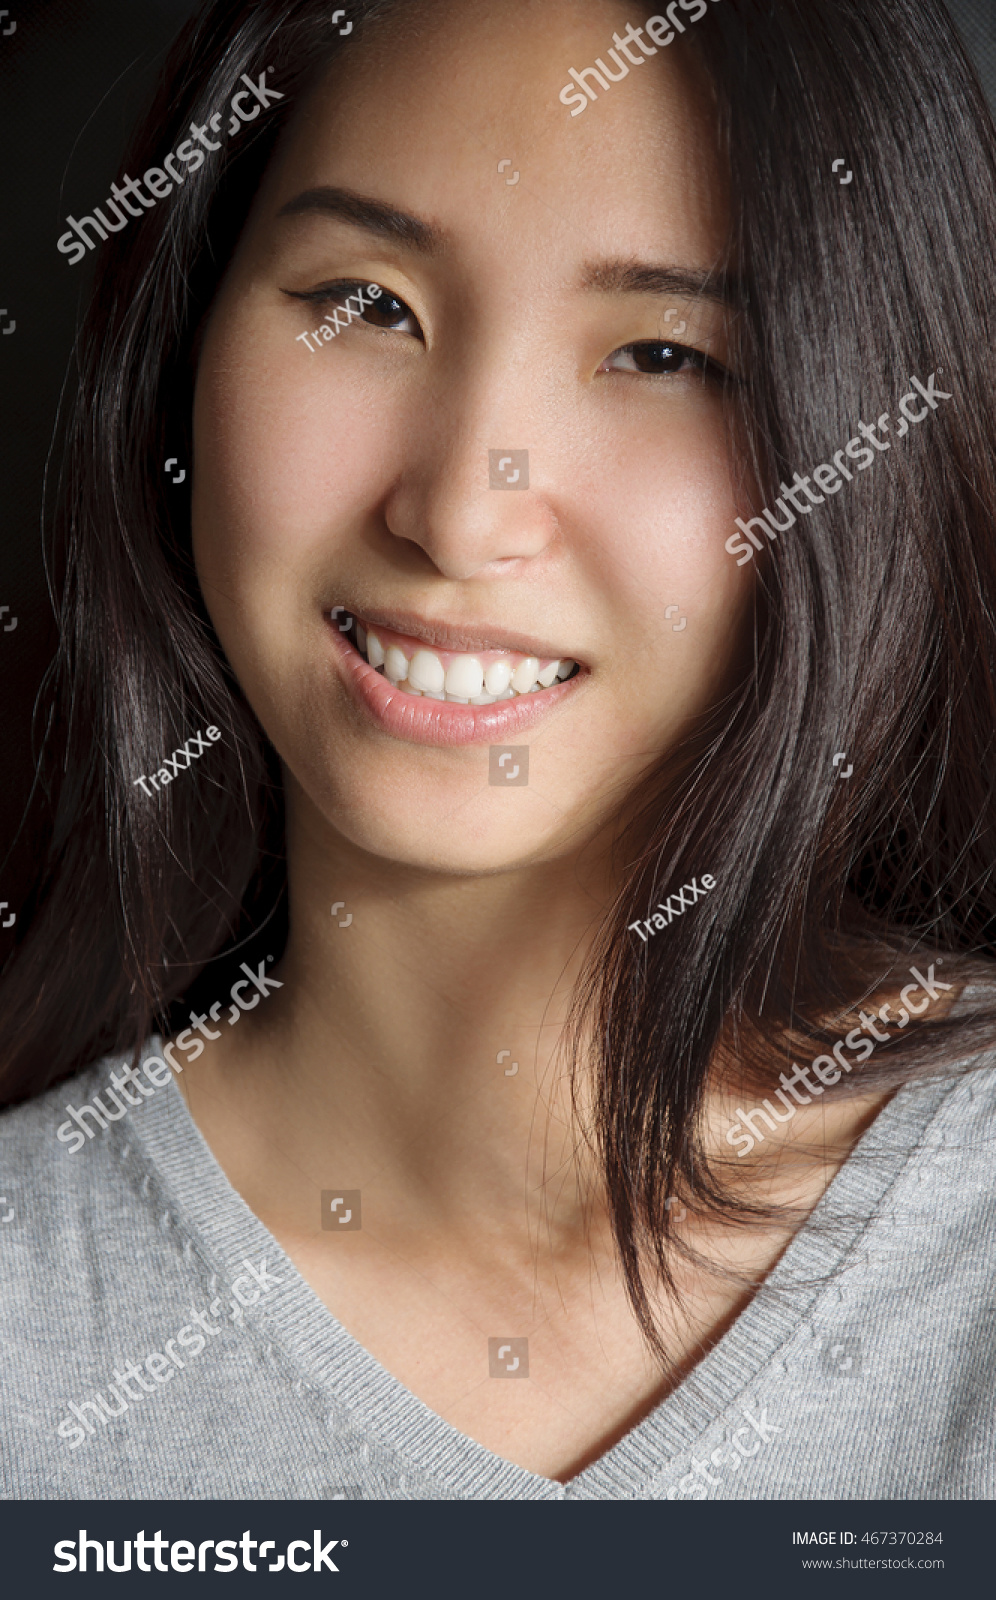 https://image.shutterstock.com/z/stock-photo-beautiful-young-mongolian-woman-on-dark-background-with-gray-shirt-467370284.jpg